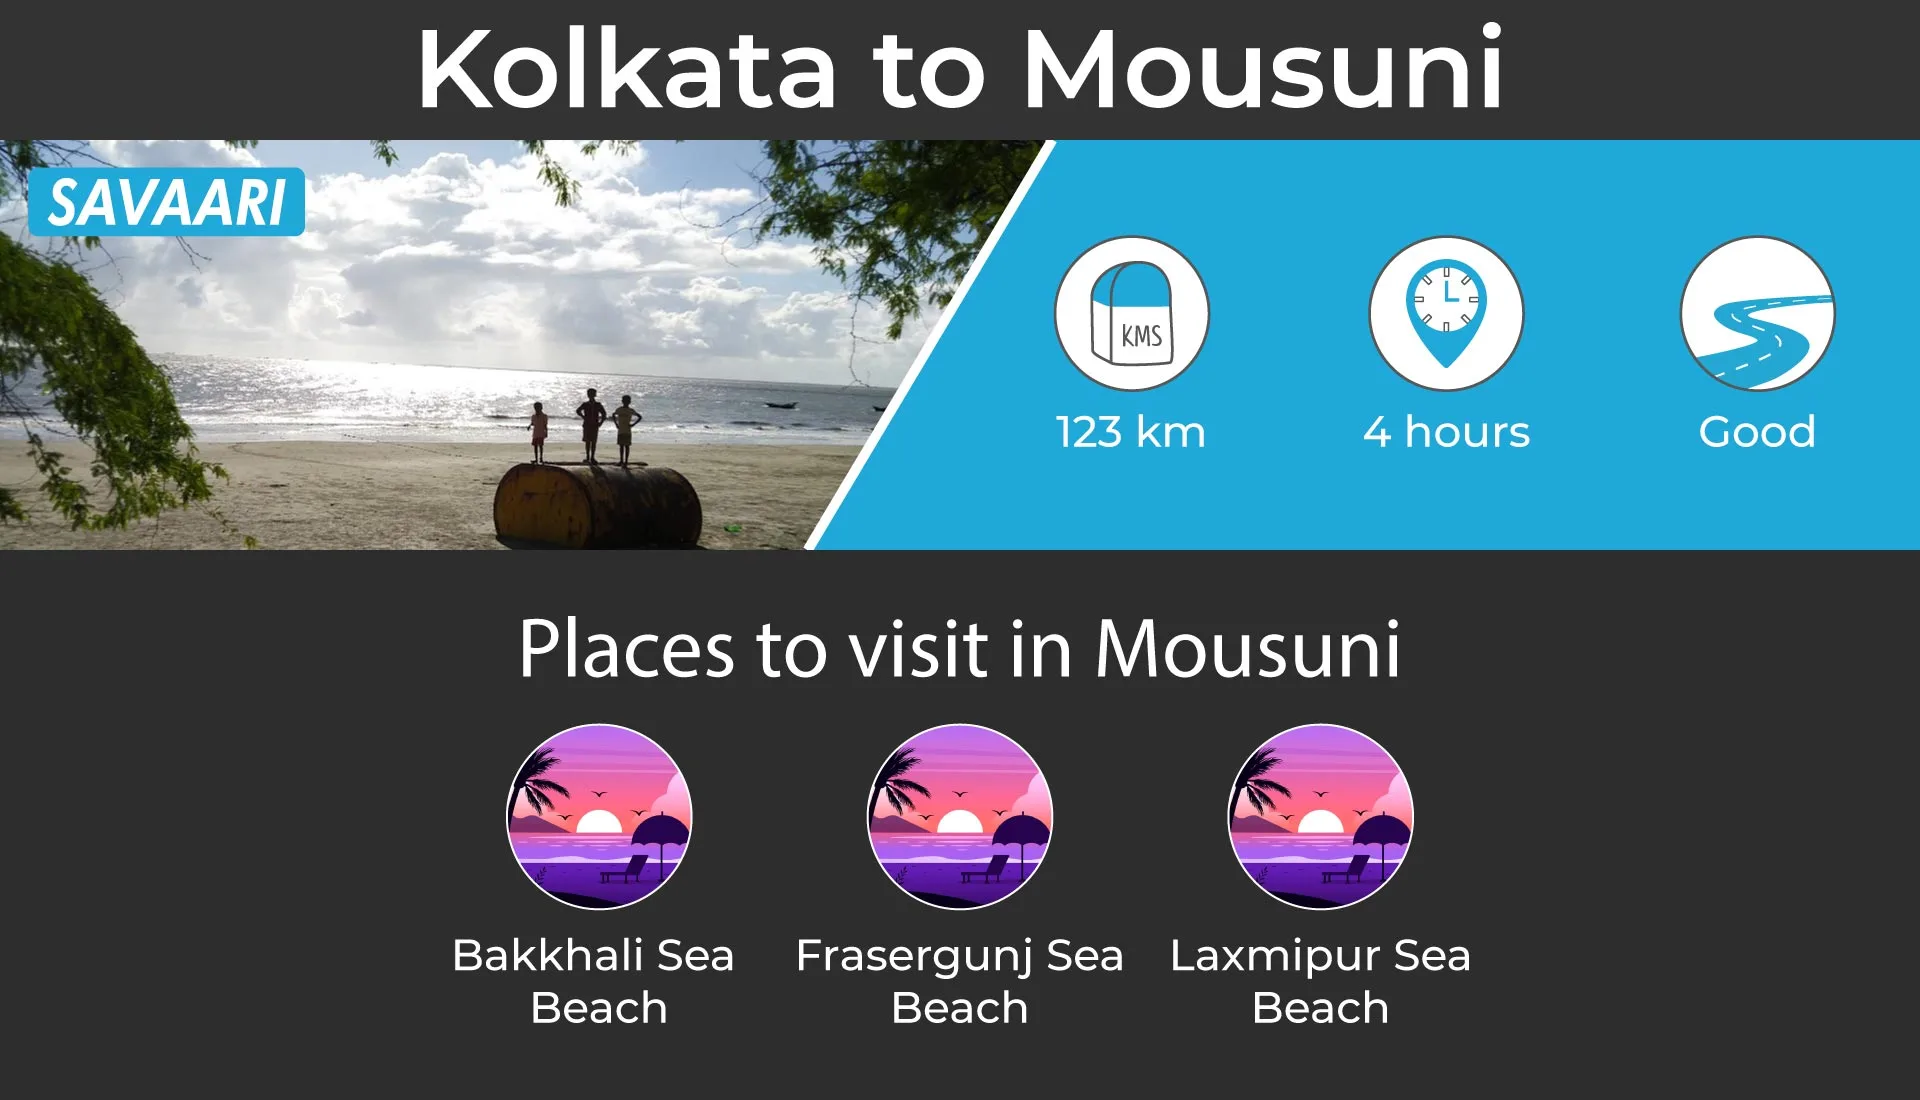 Kolkata to Mousuni a scenic shoreline road trip